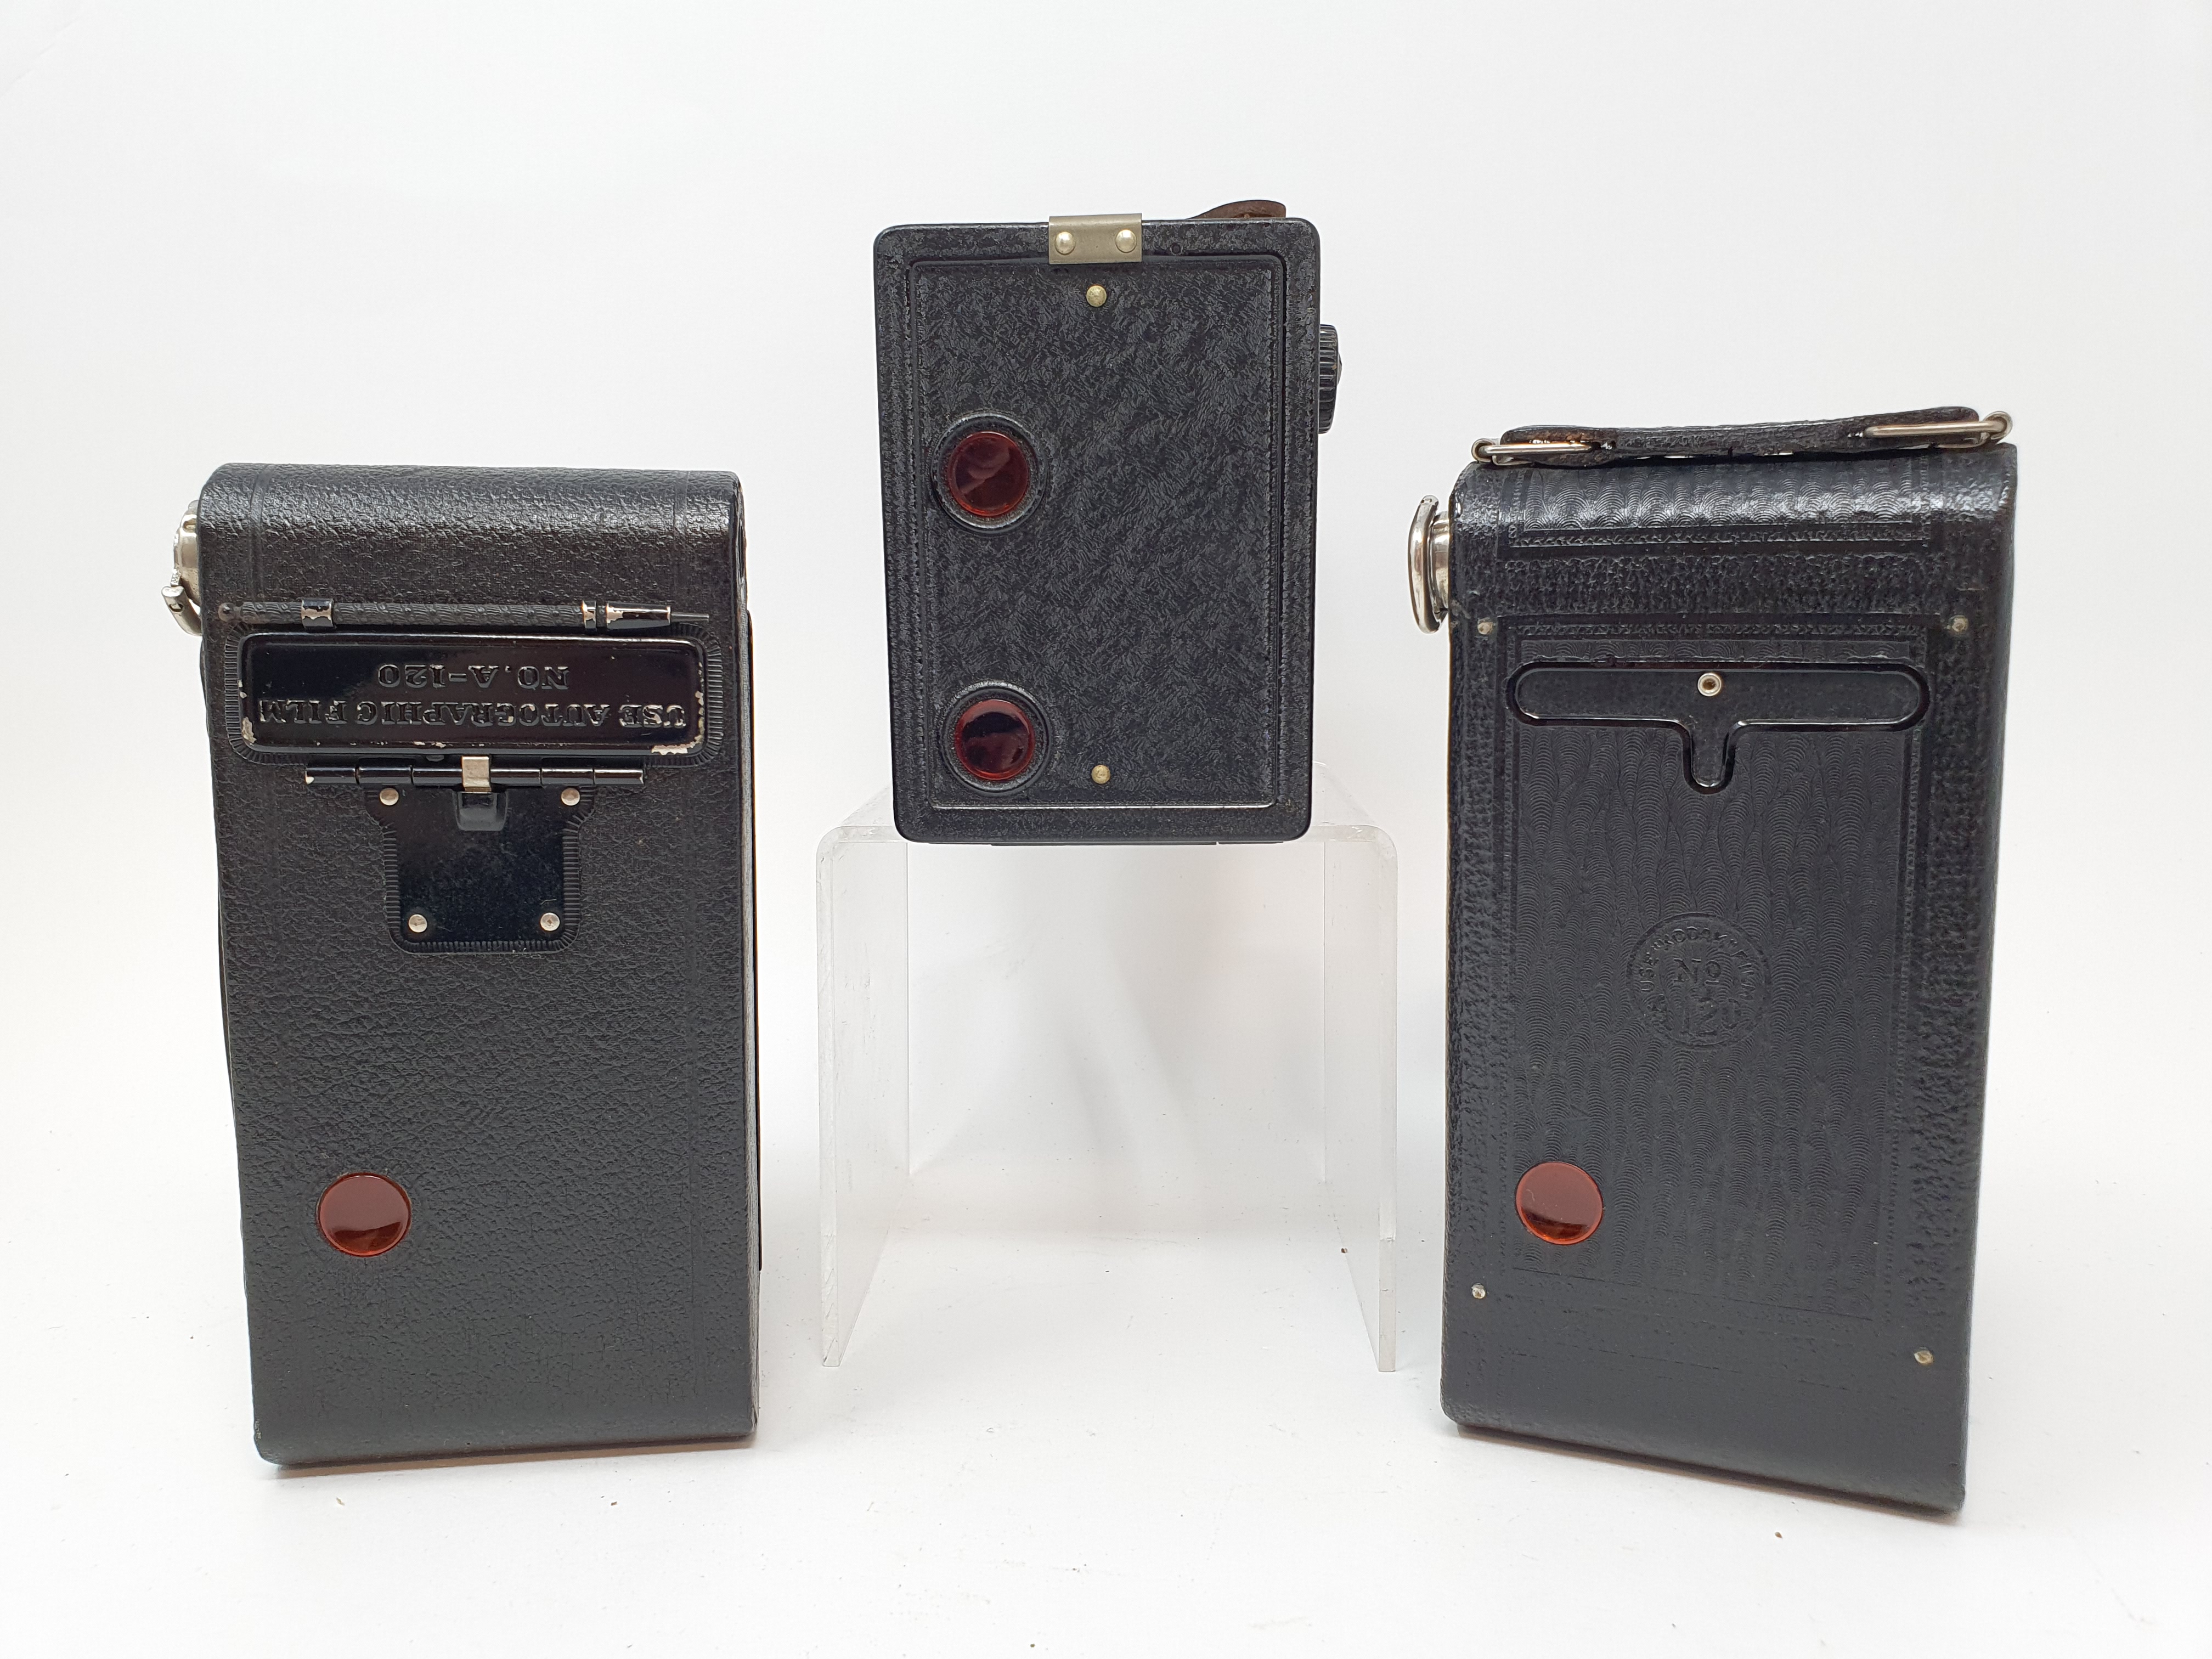 A Kodak Autographic Brownie folding camera, with canvas case, a Kodak No. 1 folding camera, and an - Image 5 of 6